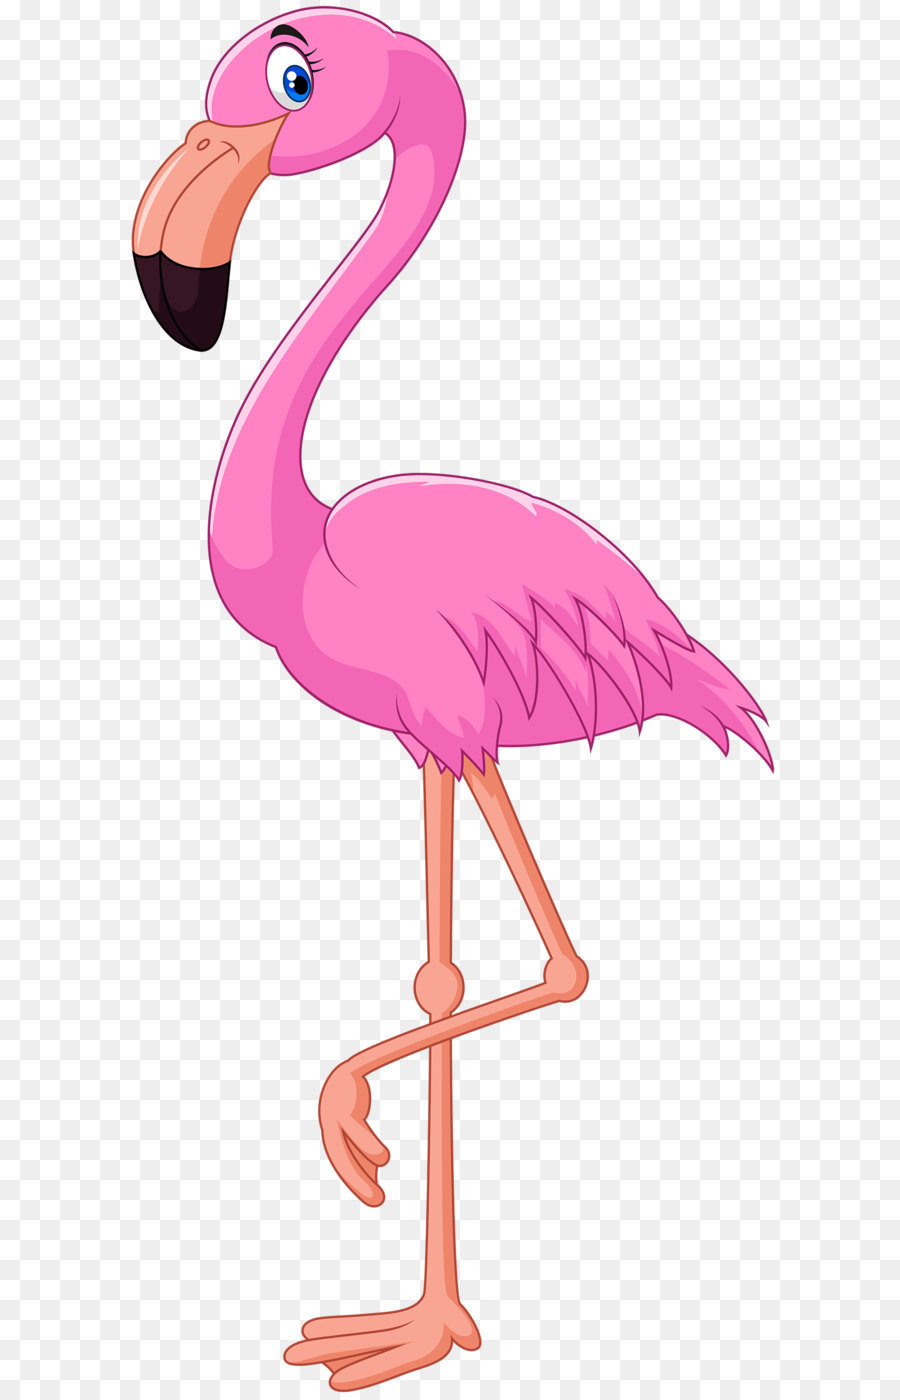 Free Transparent Flamingo, Download Free Transparent Flamingo png ...